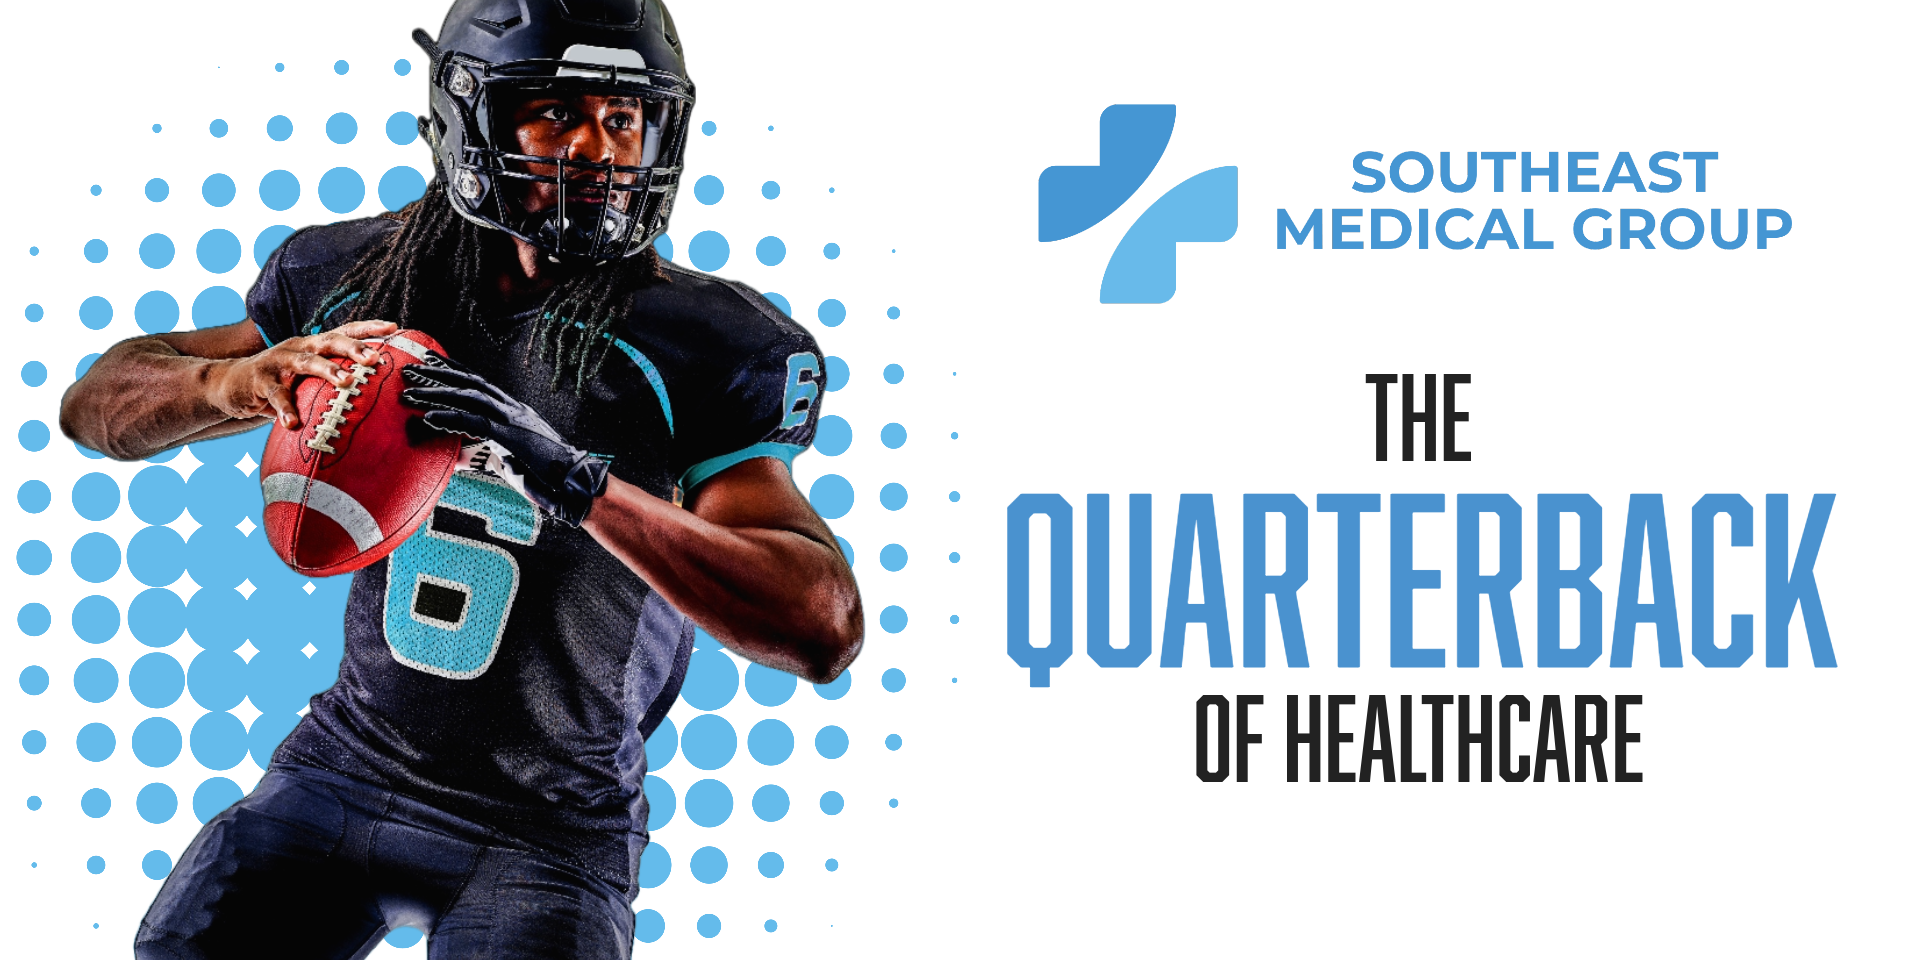 The Quarterback of Healthcare